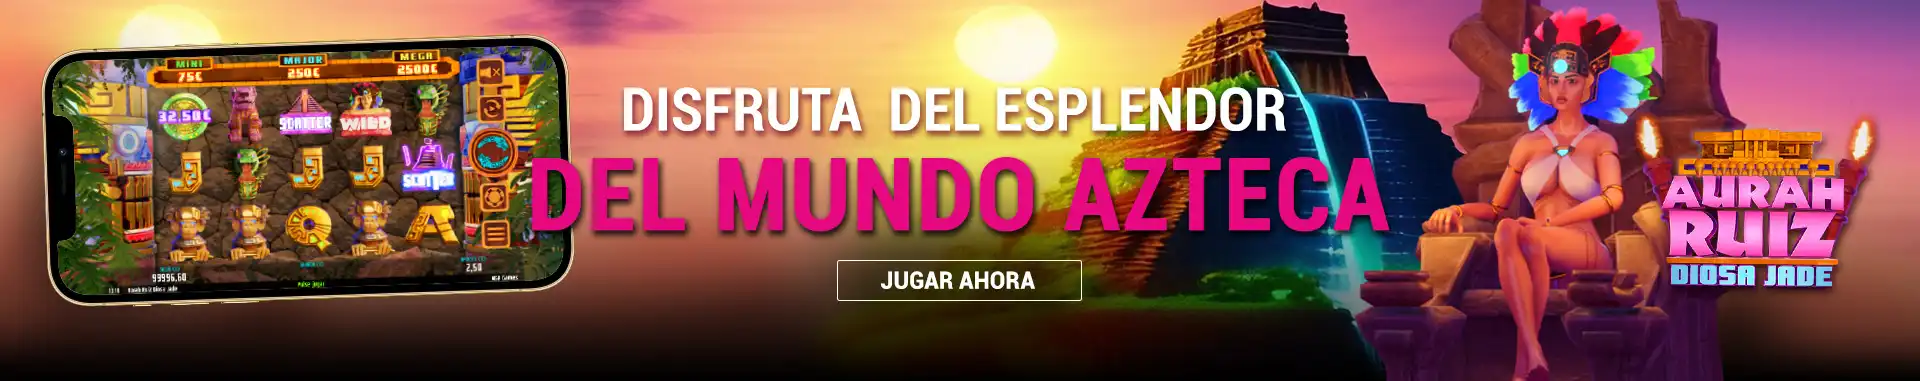 Tragaperras online Aurah Ruiz Diosa Jade